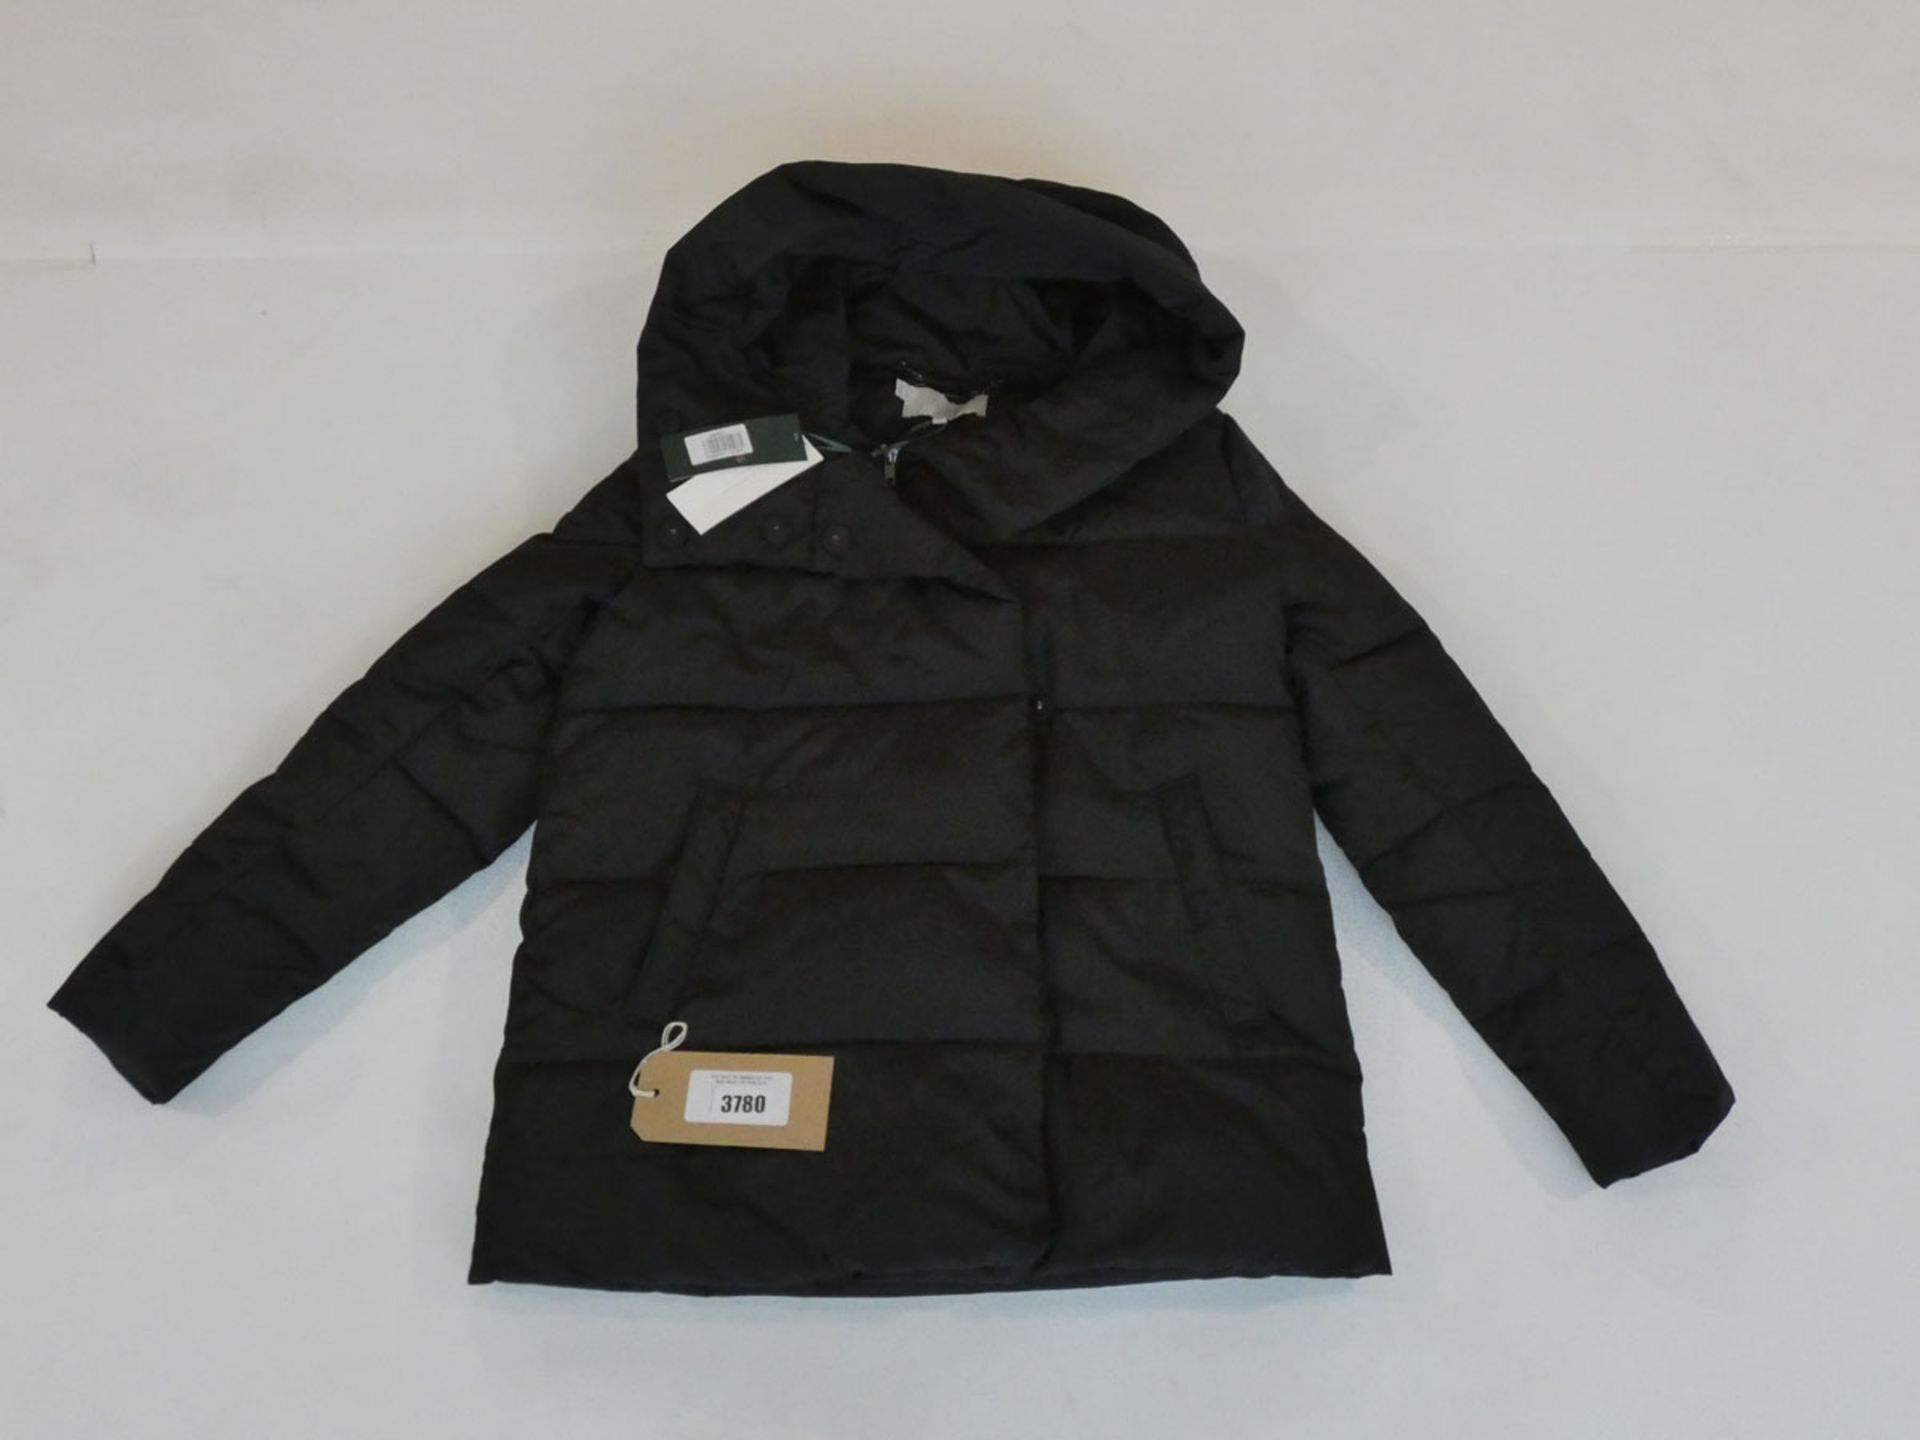 Hobbs London ladies short heather puffer jacket in black size UK8